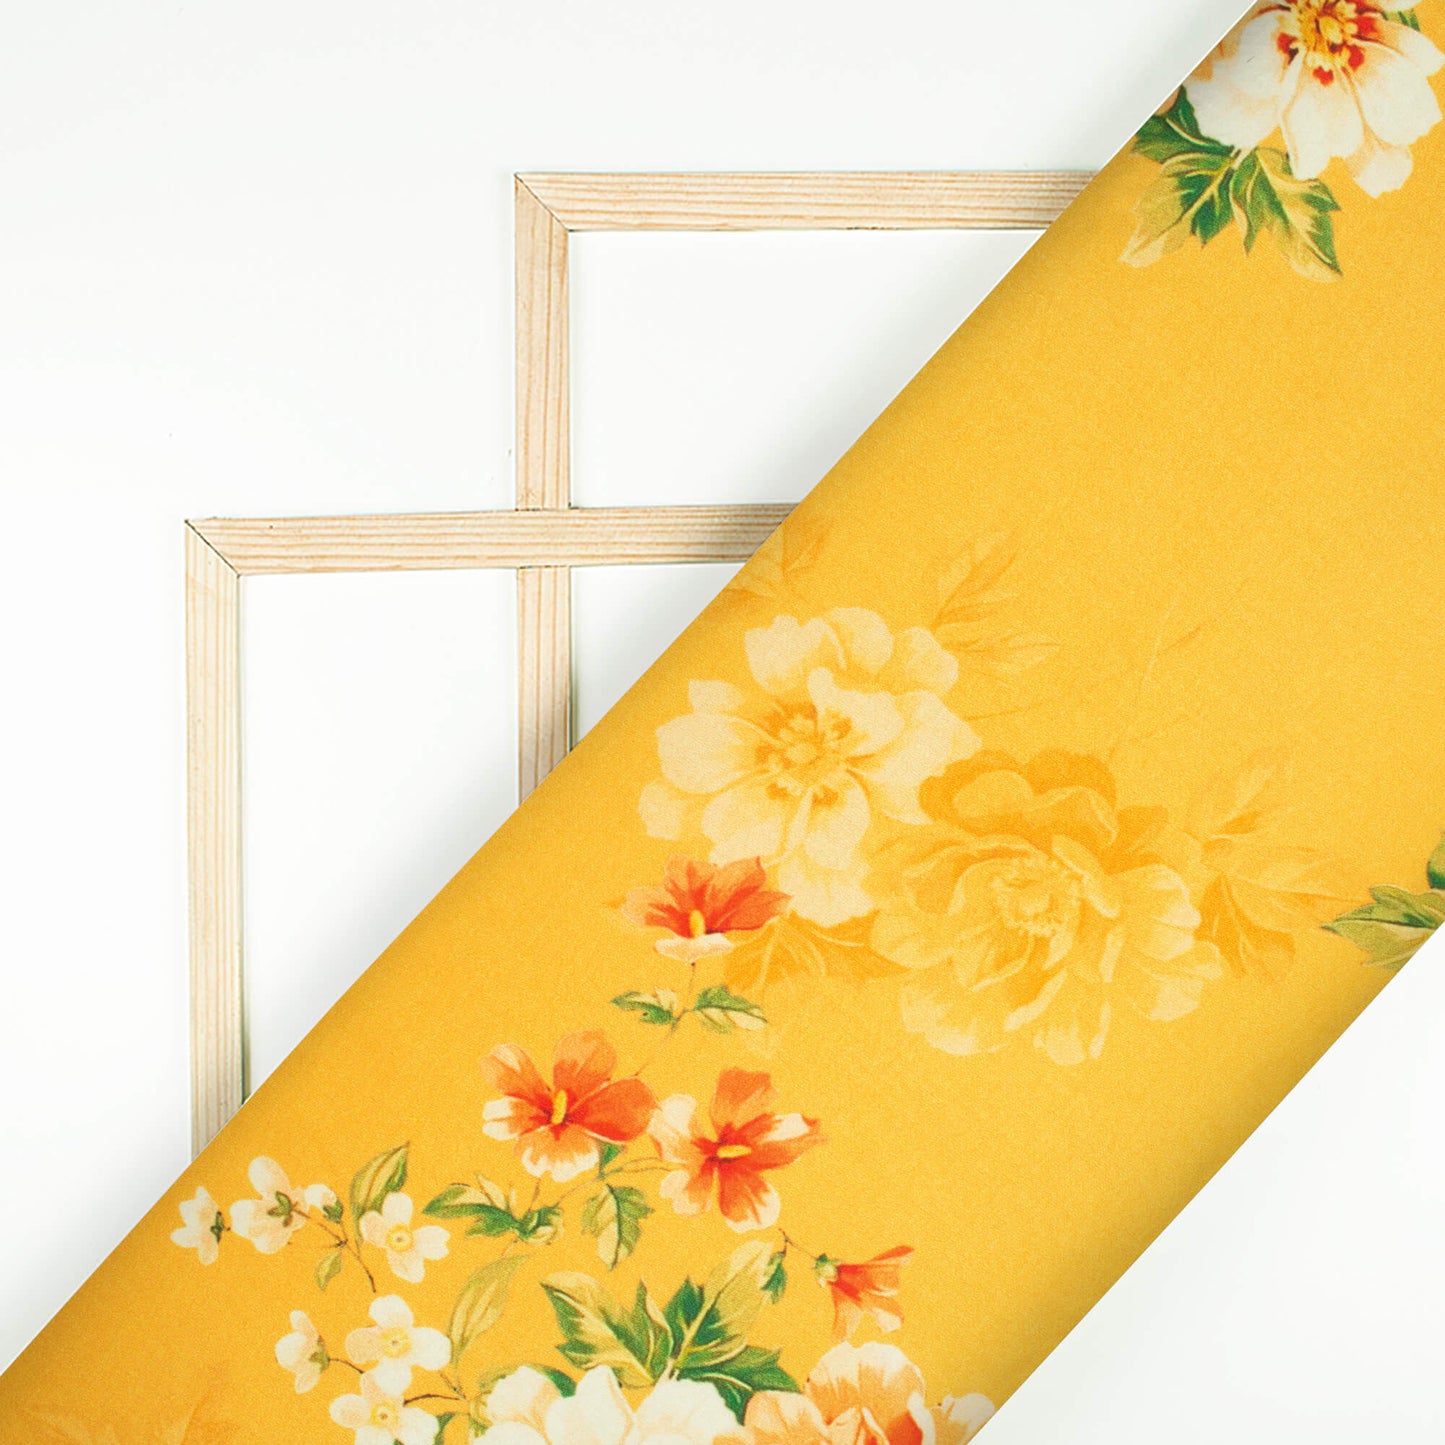 Mustard Yellow And Orange Floral Pattern Digital Print Premium Lush Satin Fabric